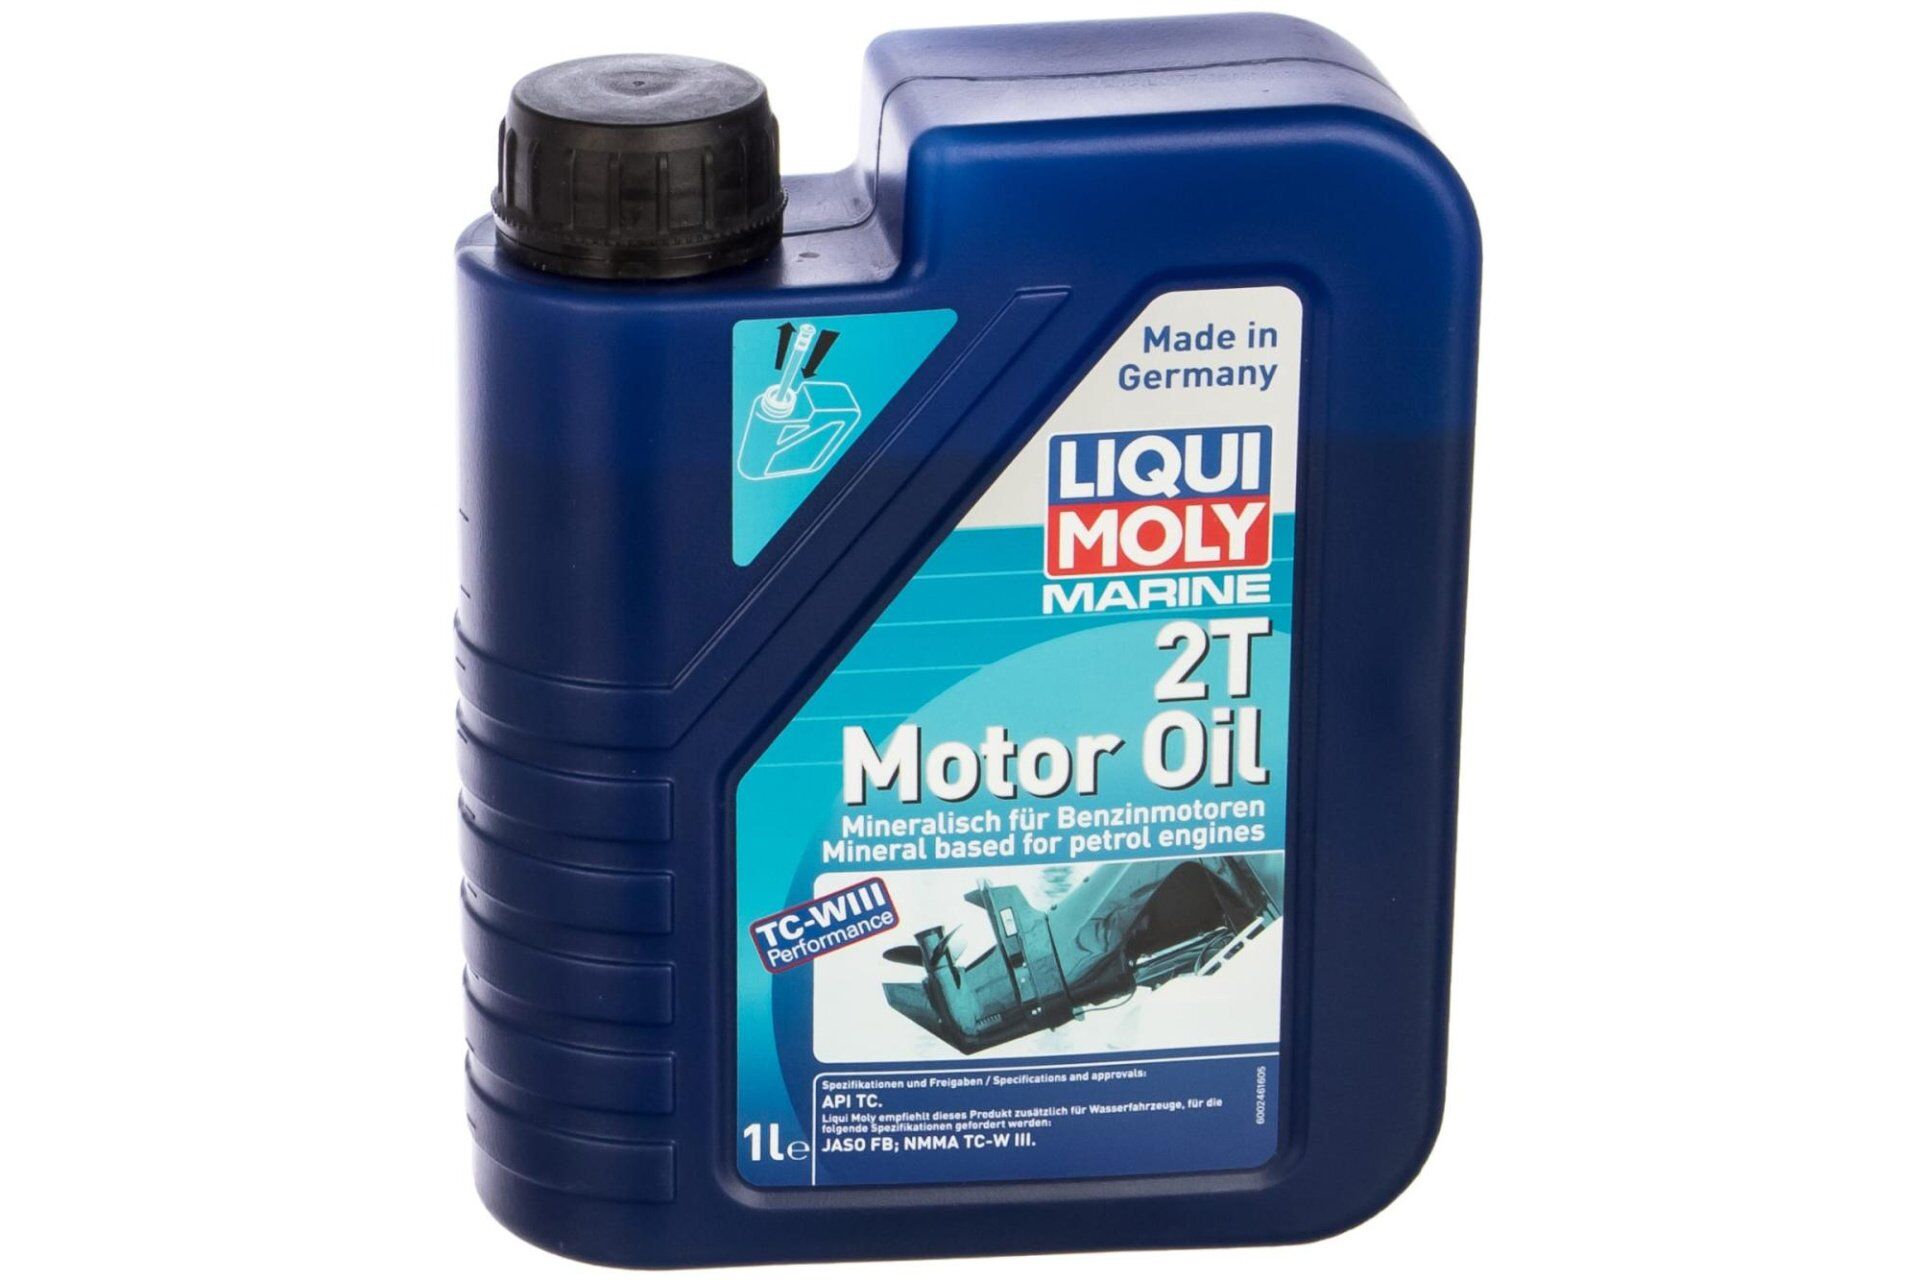 LiquiMoly Marine 2T Motor Oil (1 л.)